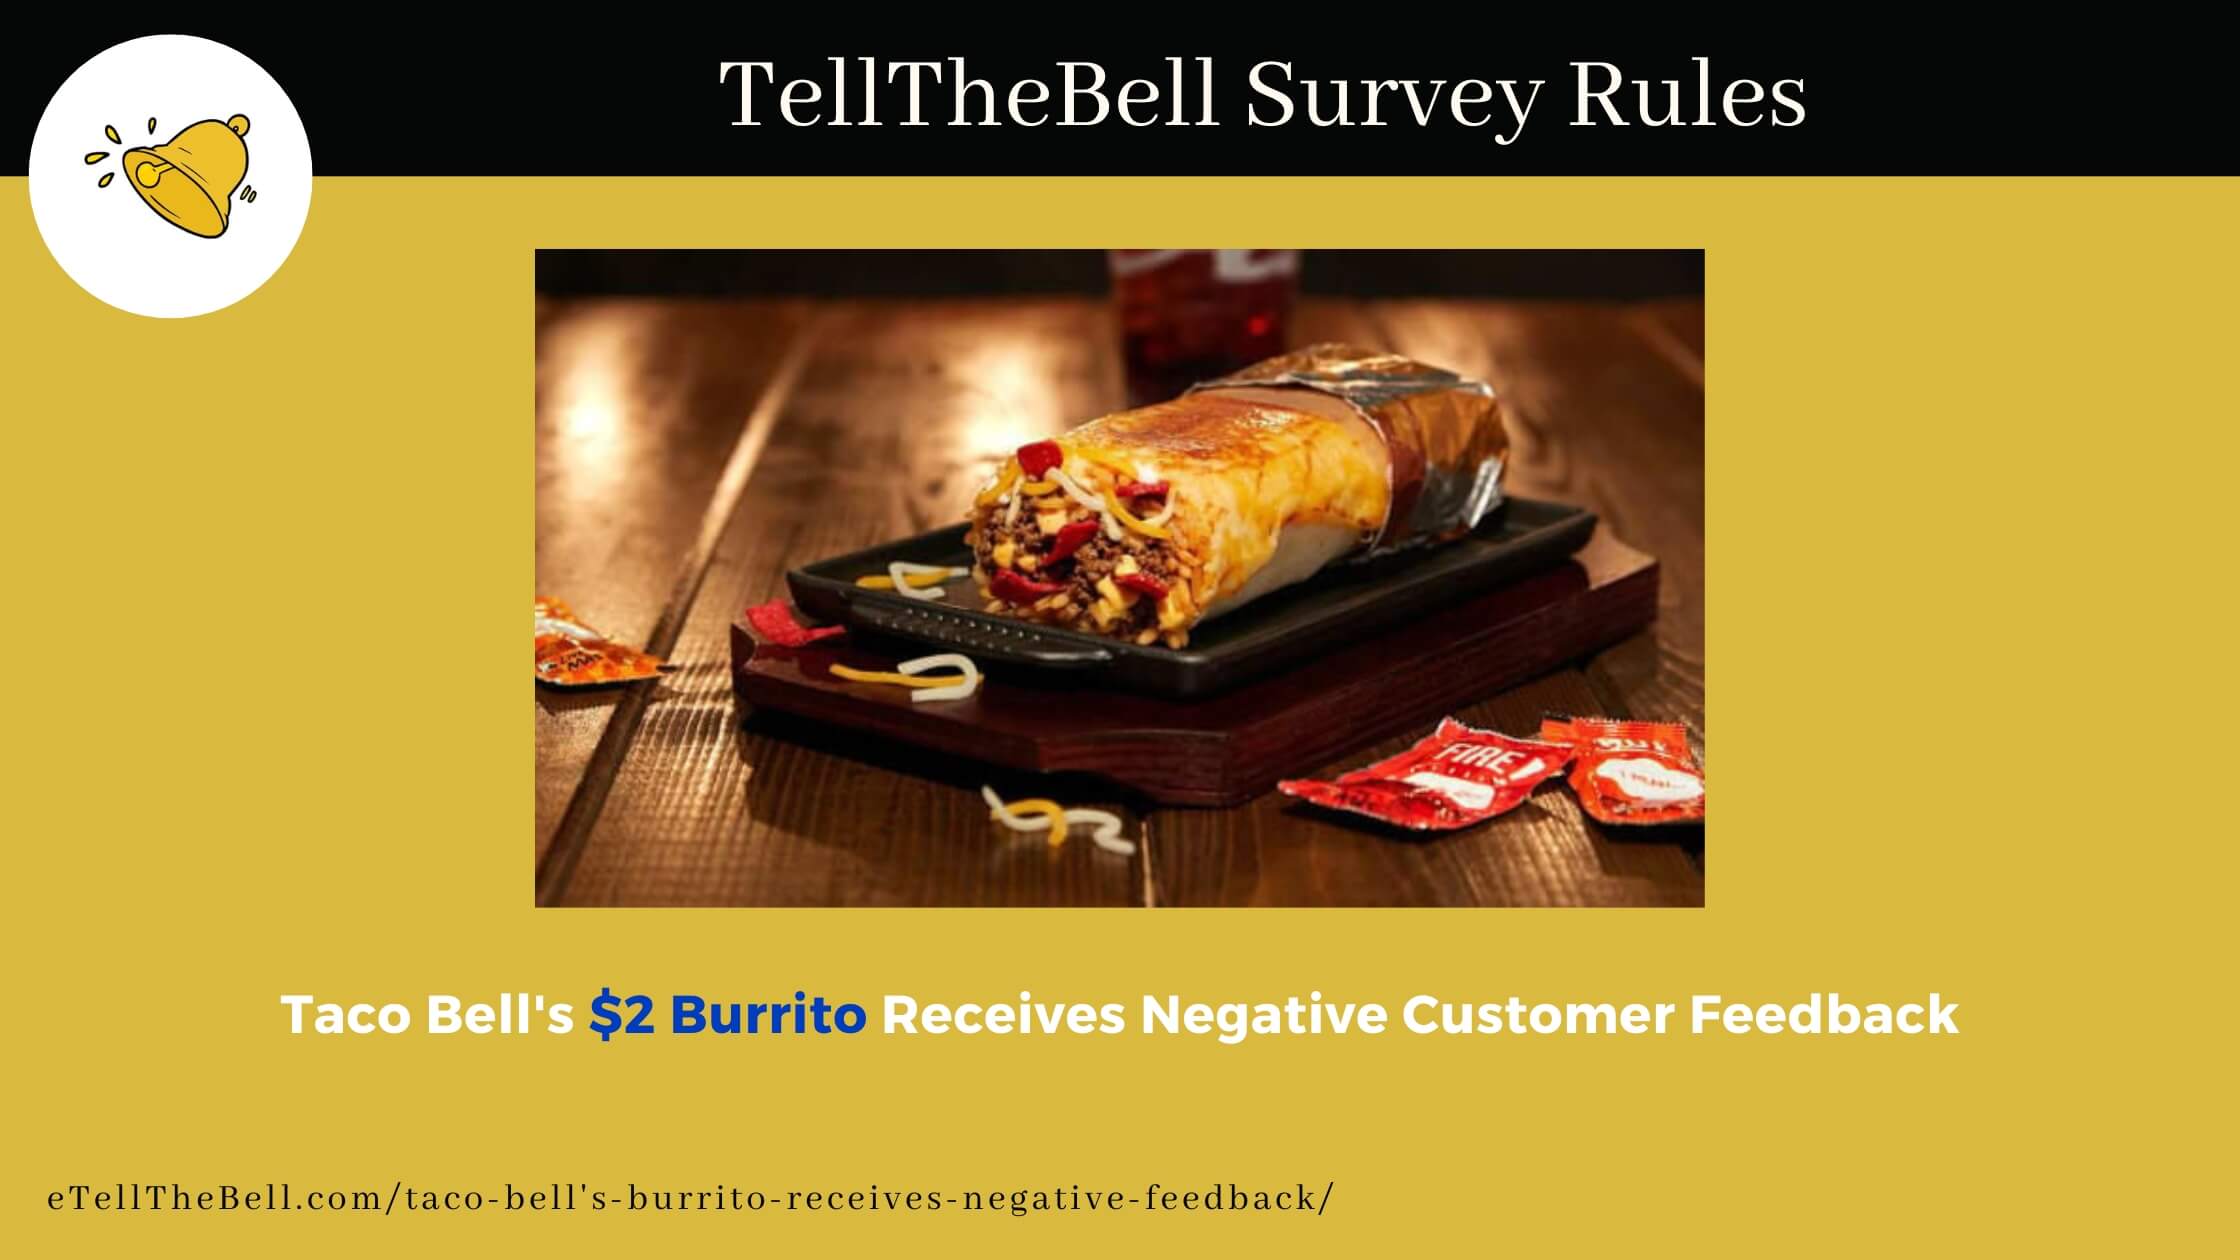 Taco Bell's $2 Burrito Receives Negative Customer Feedback